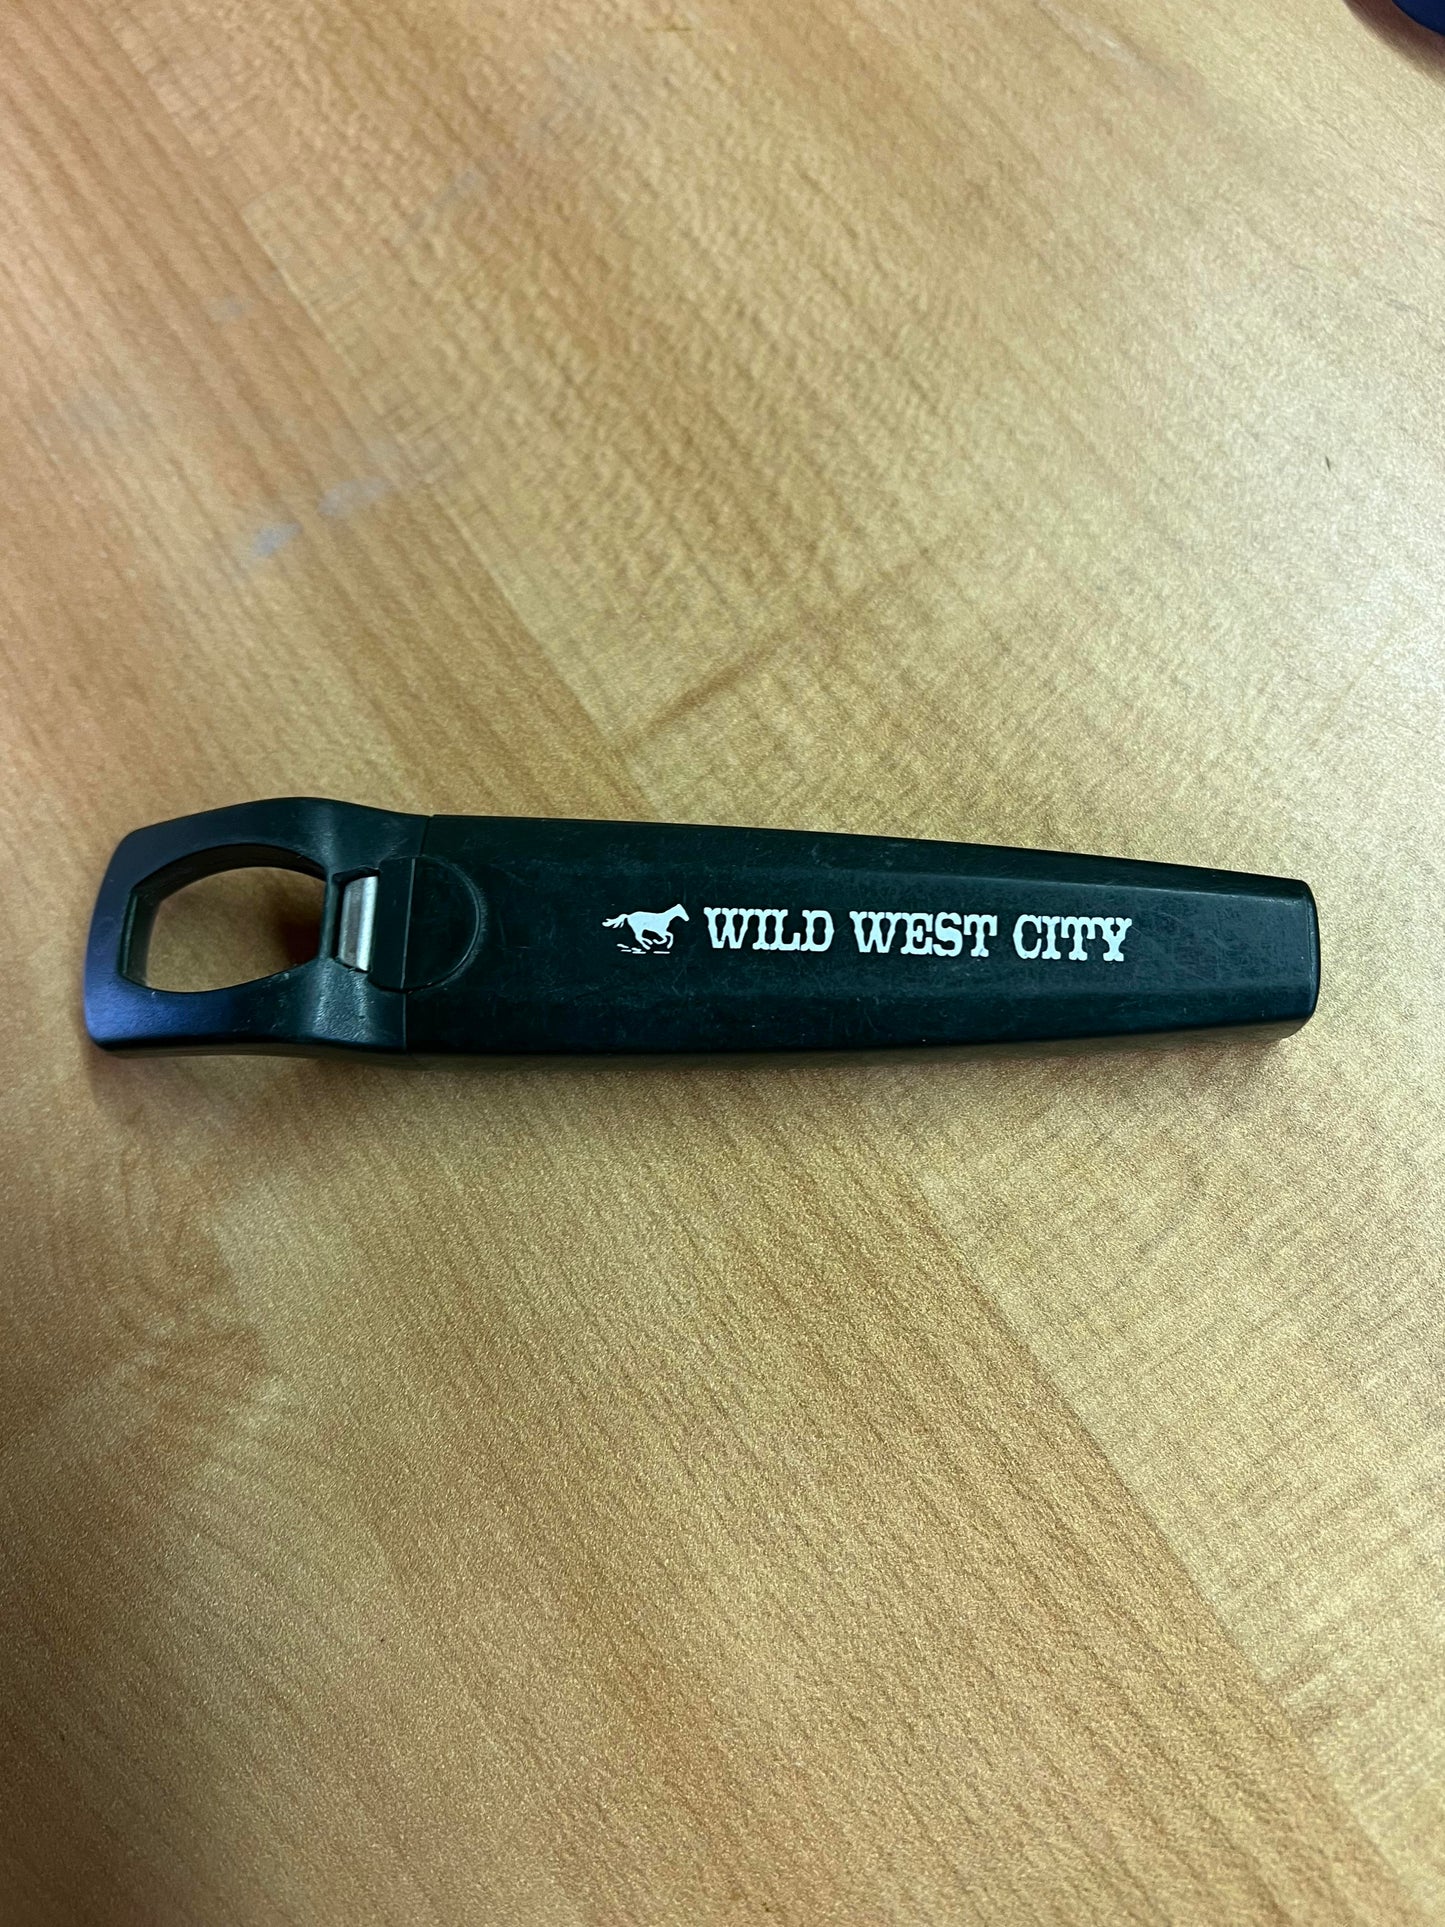 Novelty Wild West City Bottle Opener/corkscrew